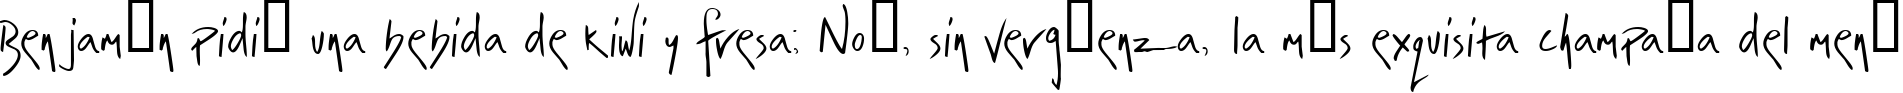 Пример написания шрифтом irrep текста на испанском